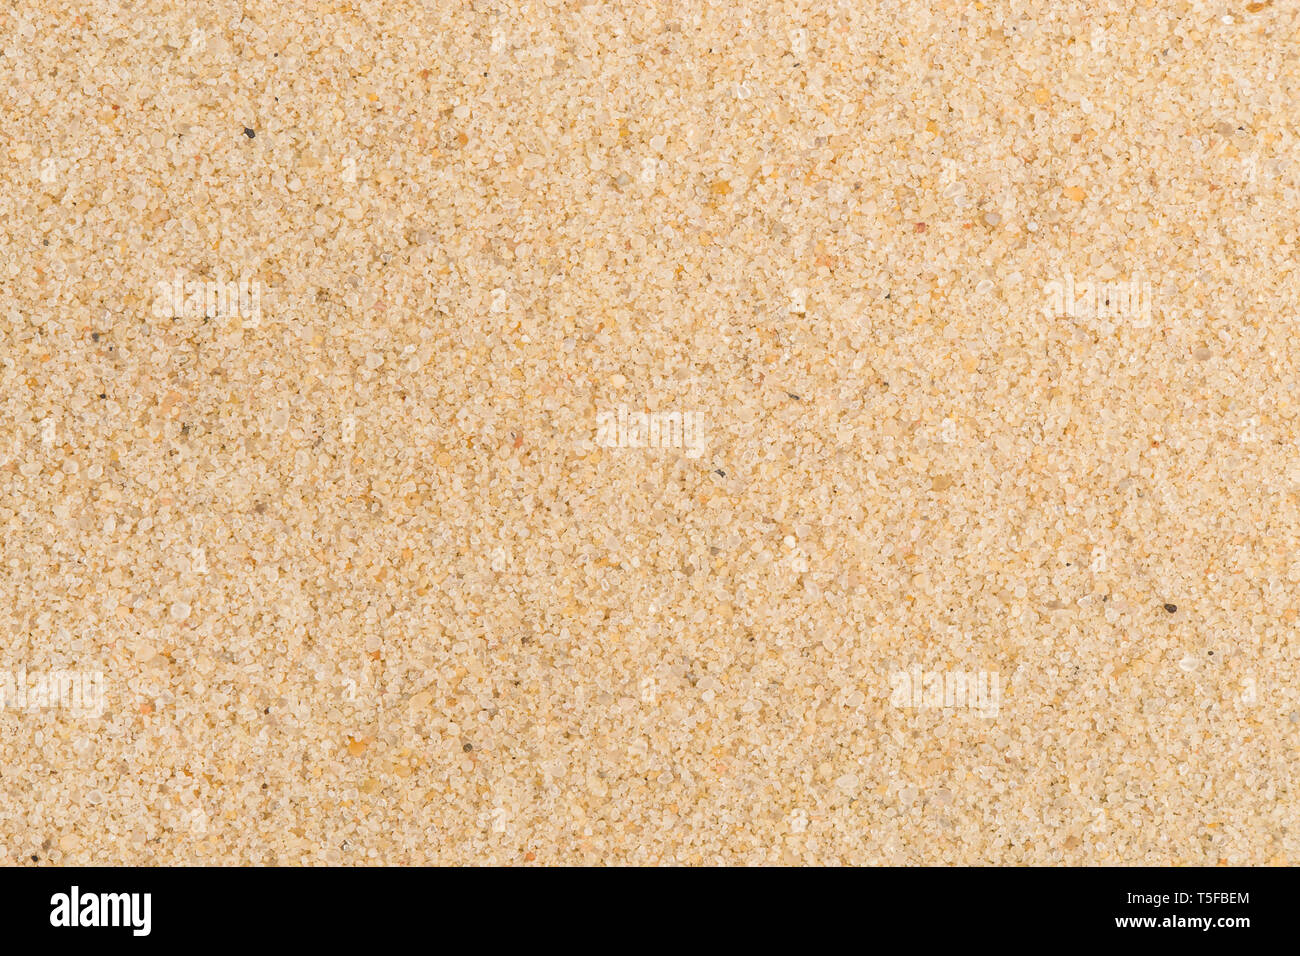 yellow sand background, grains, macro, close up Stock Photo